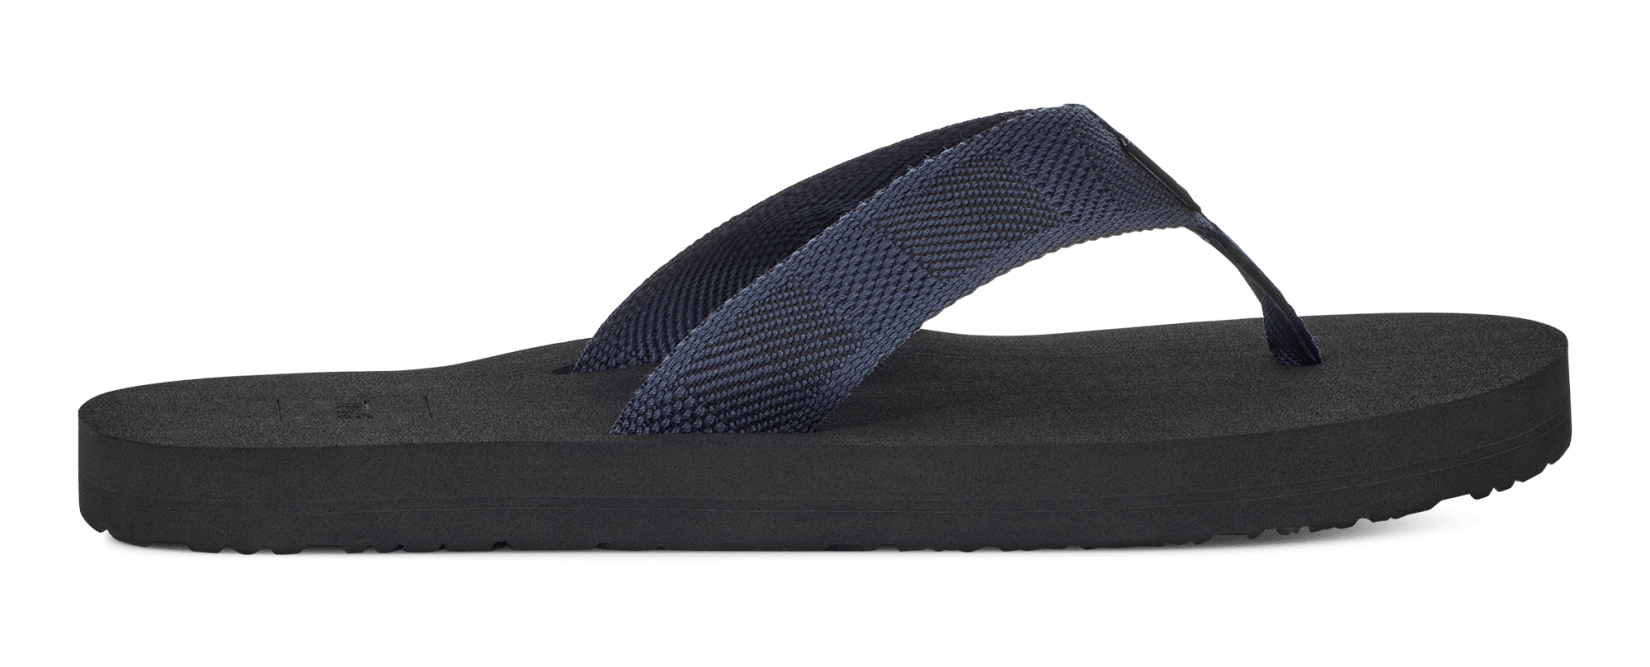 Teva® Mush for Men | Most Comfortable Sandals at Teva.com